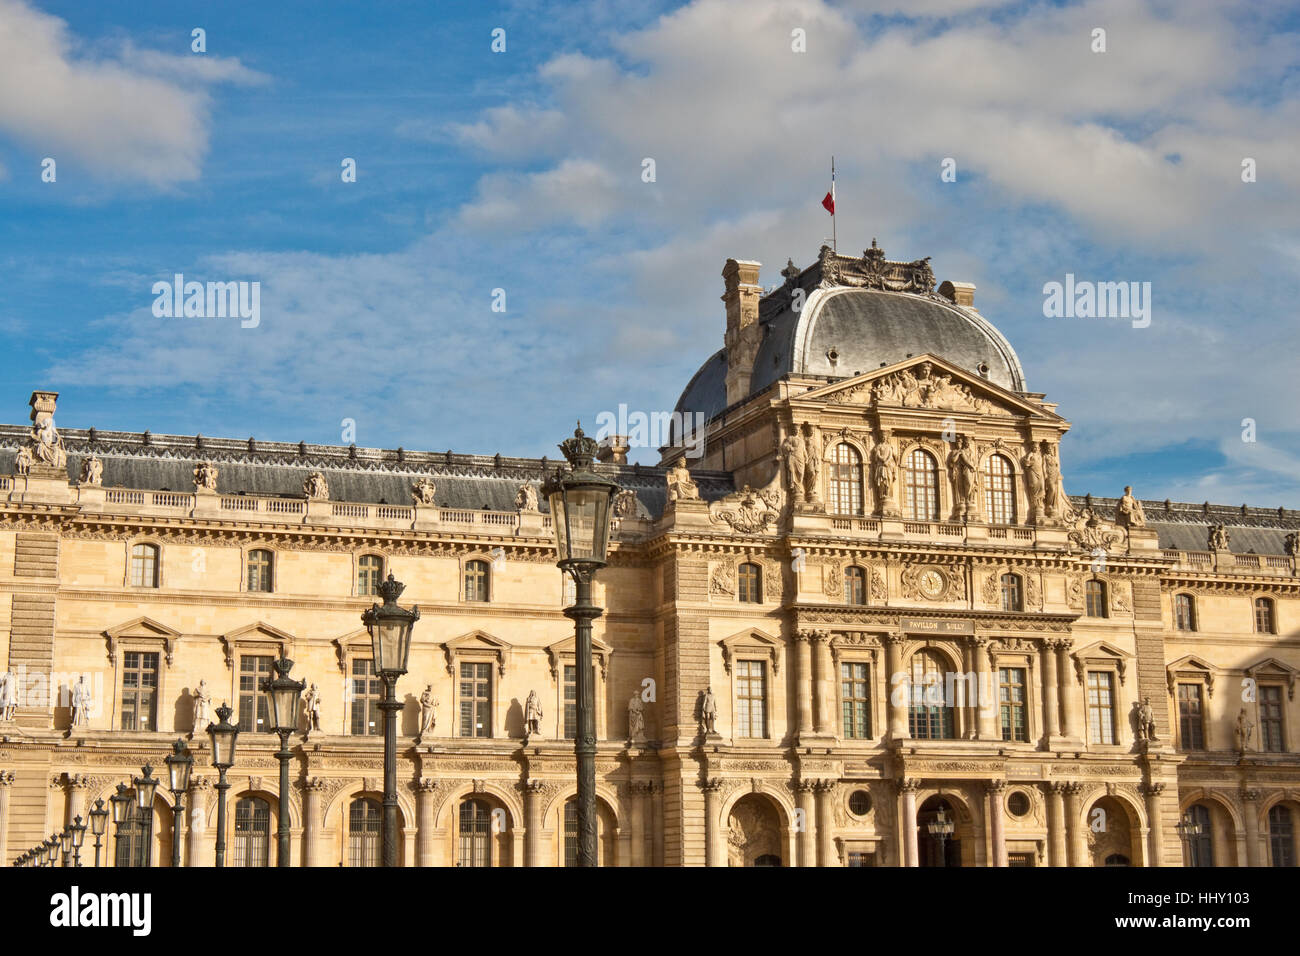 Musee du Louvre, Louvre museum in Paris, France. Stock Photo